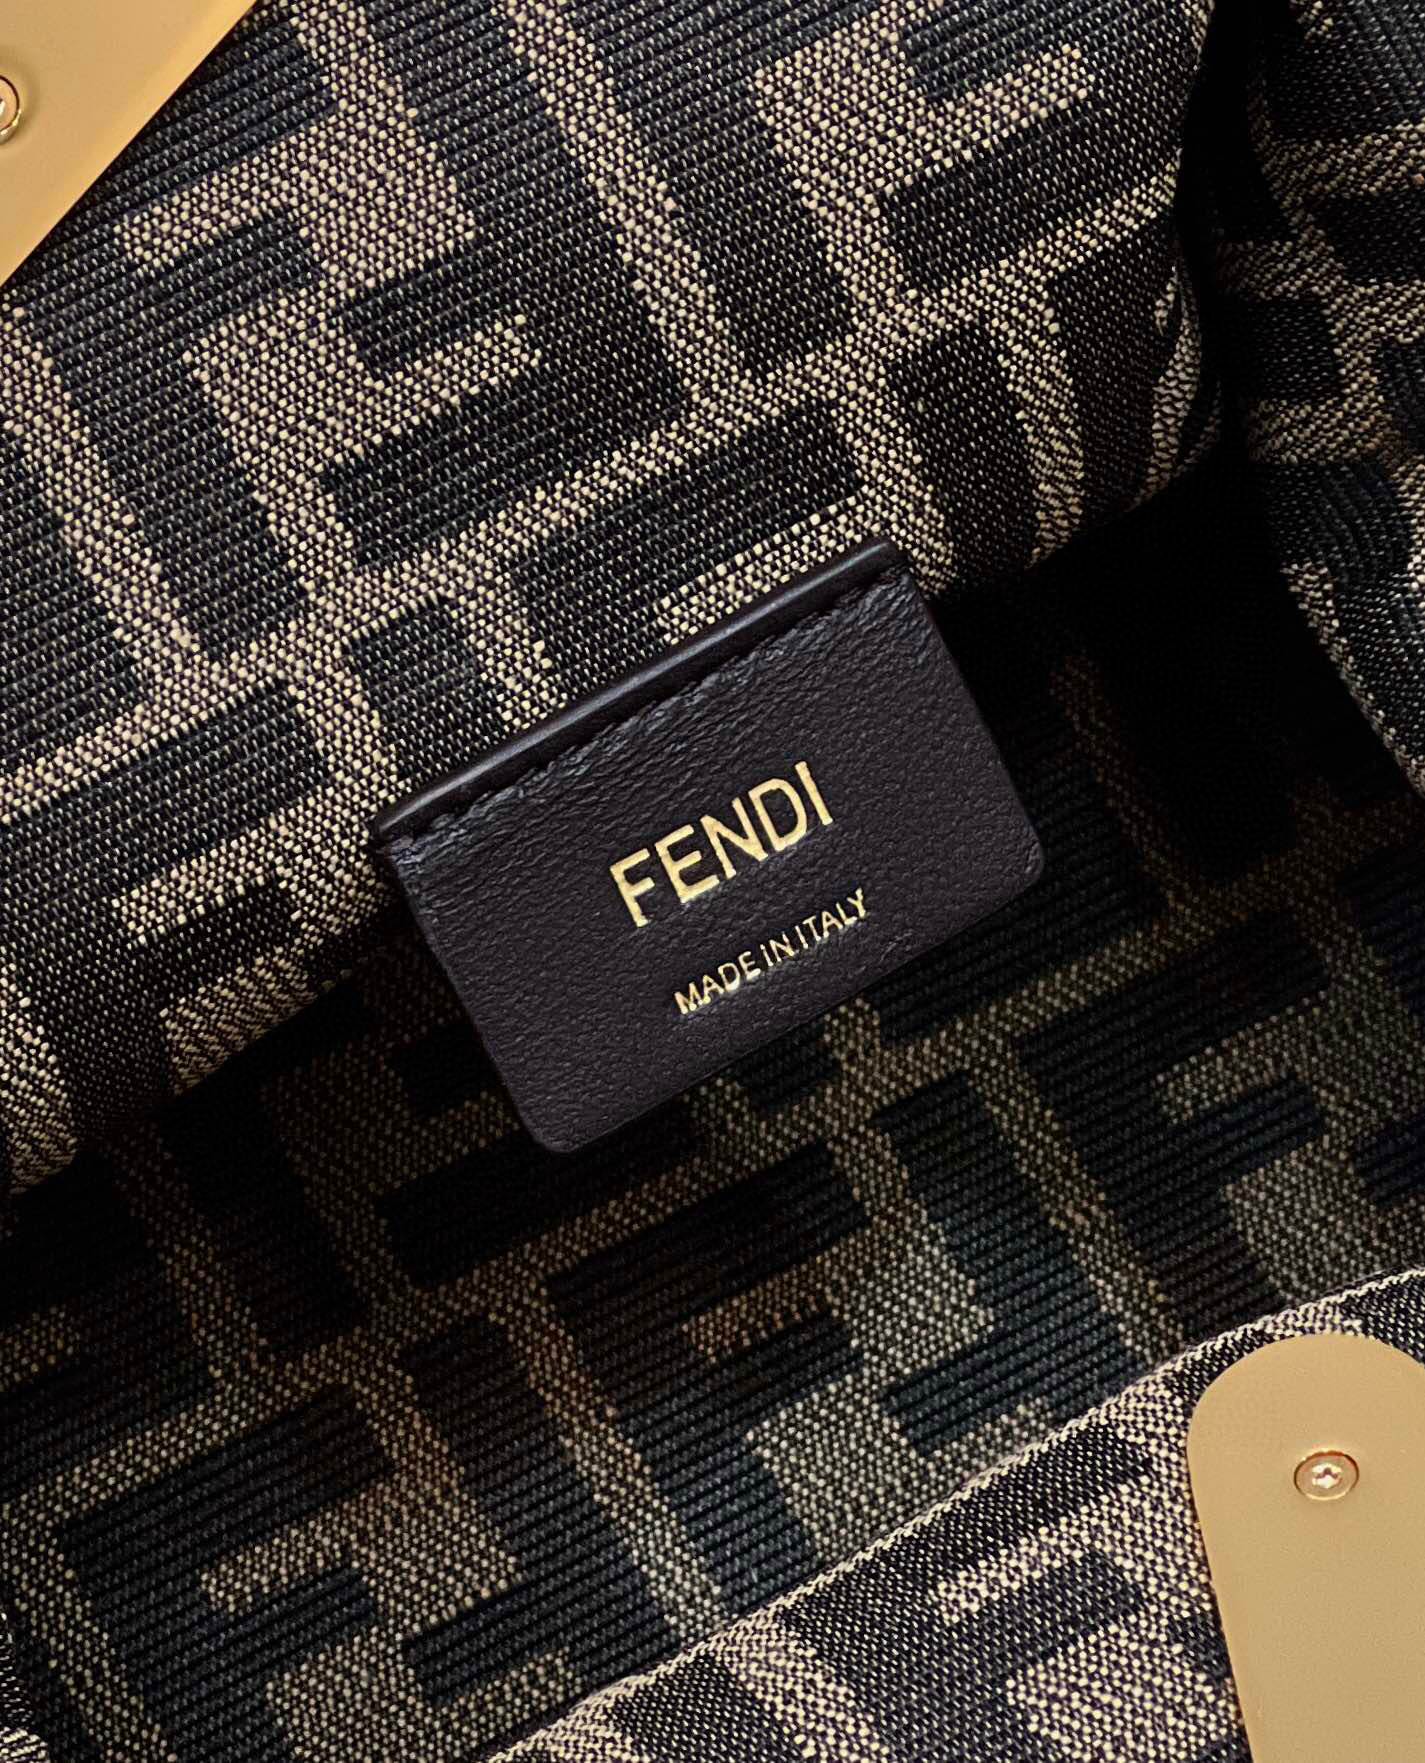 Fendi First Small braided leather bag Black F80103